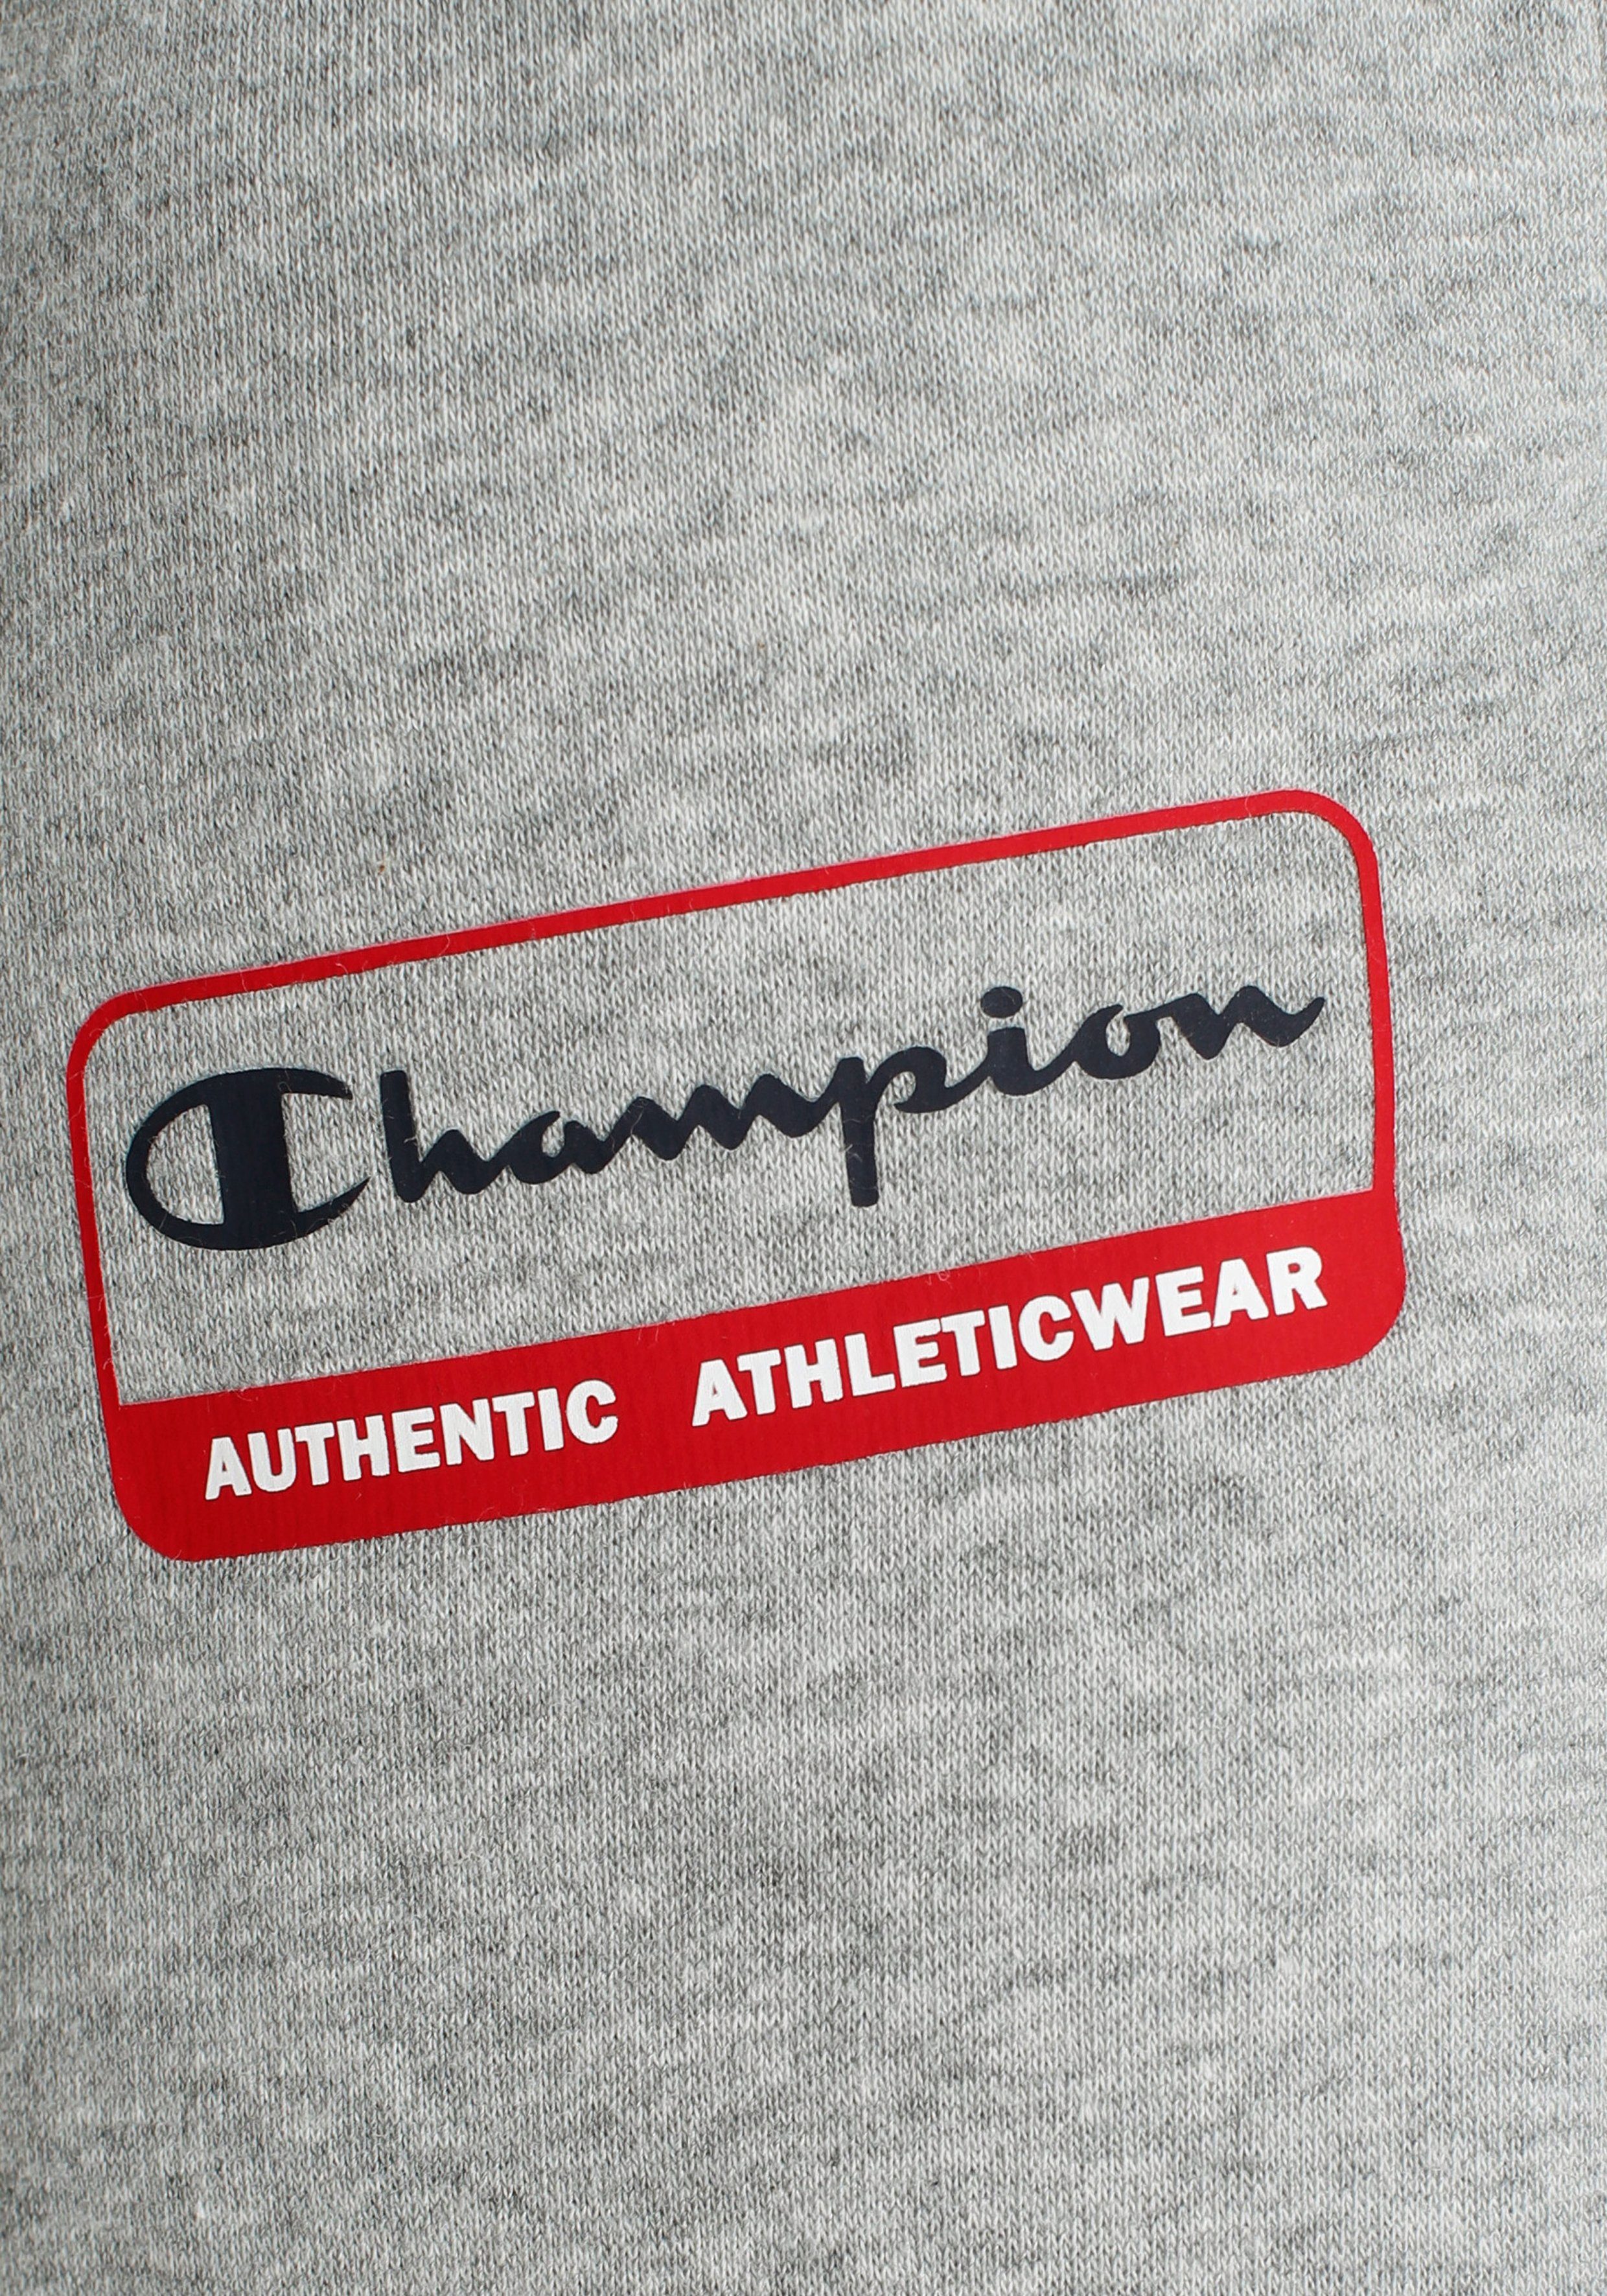 Champion Jogginghose Pants Cuff Graphic Rib grau Shop